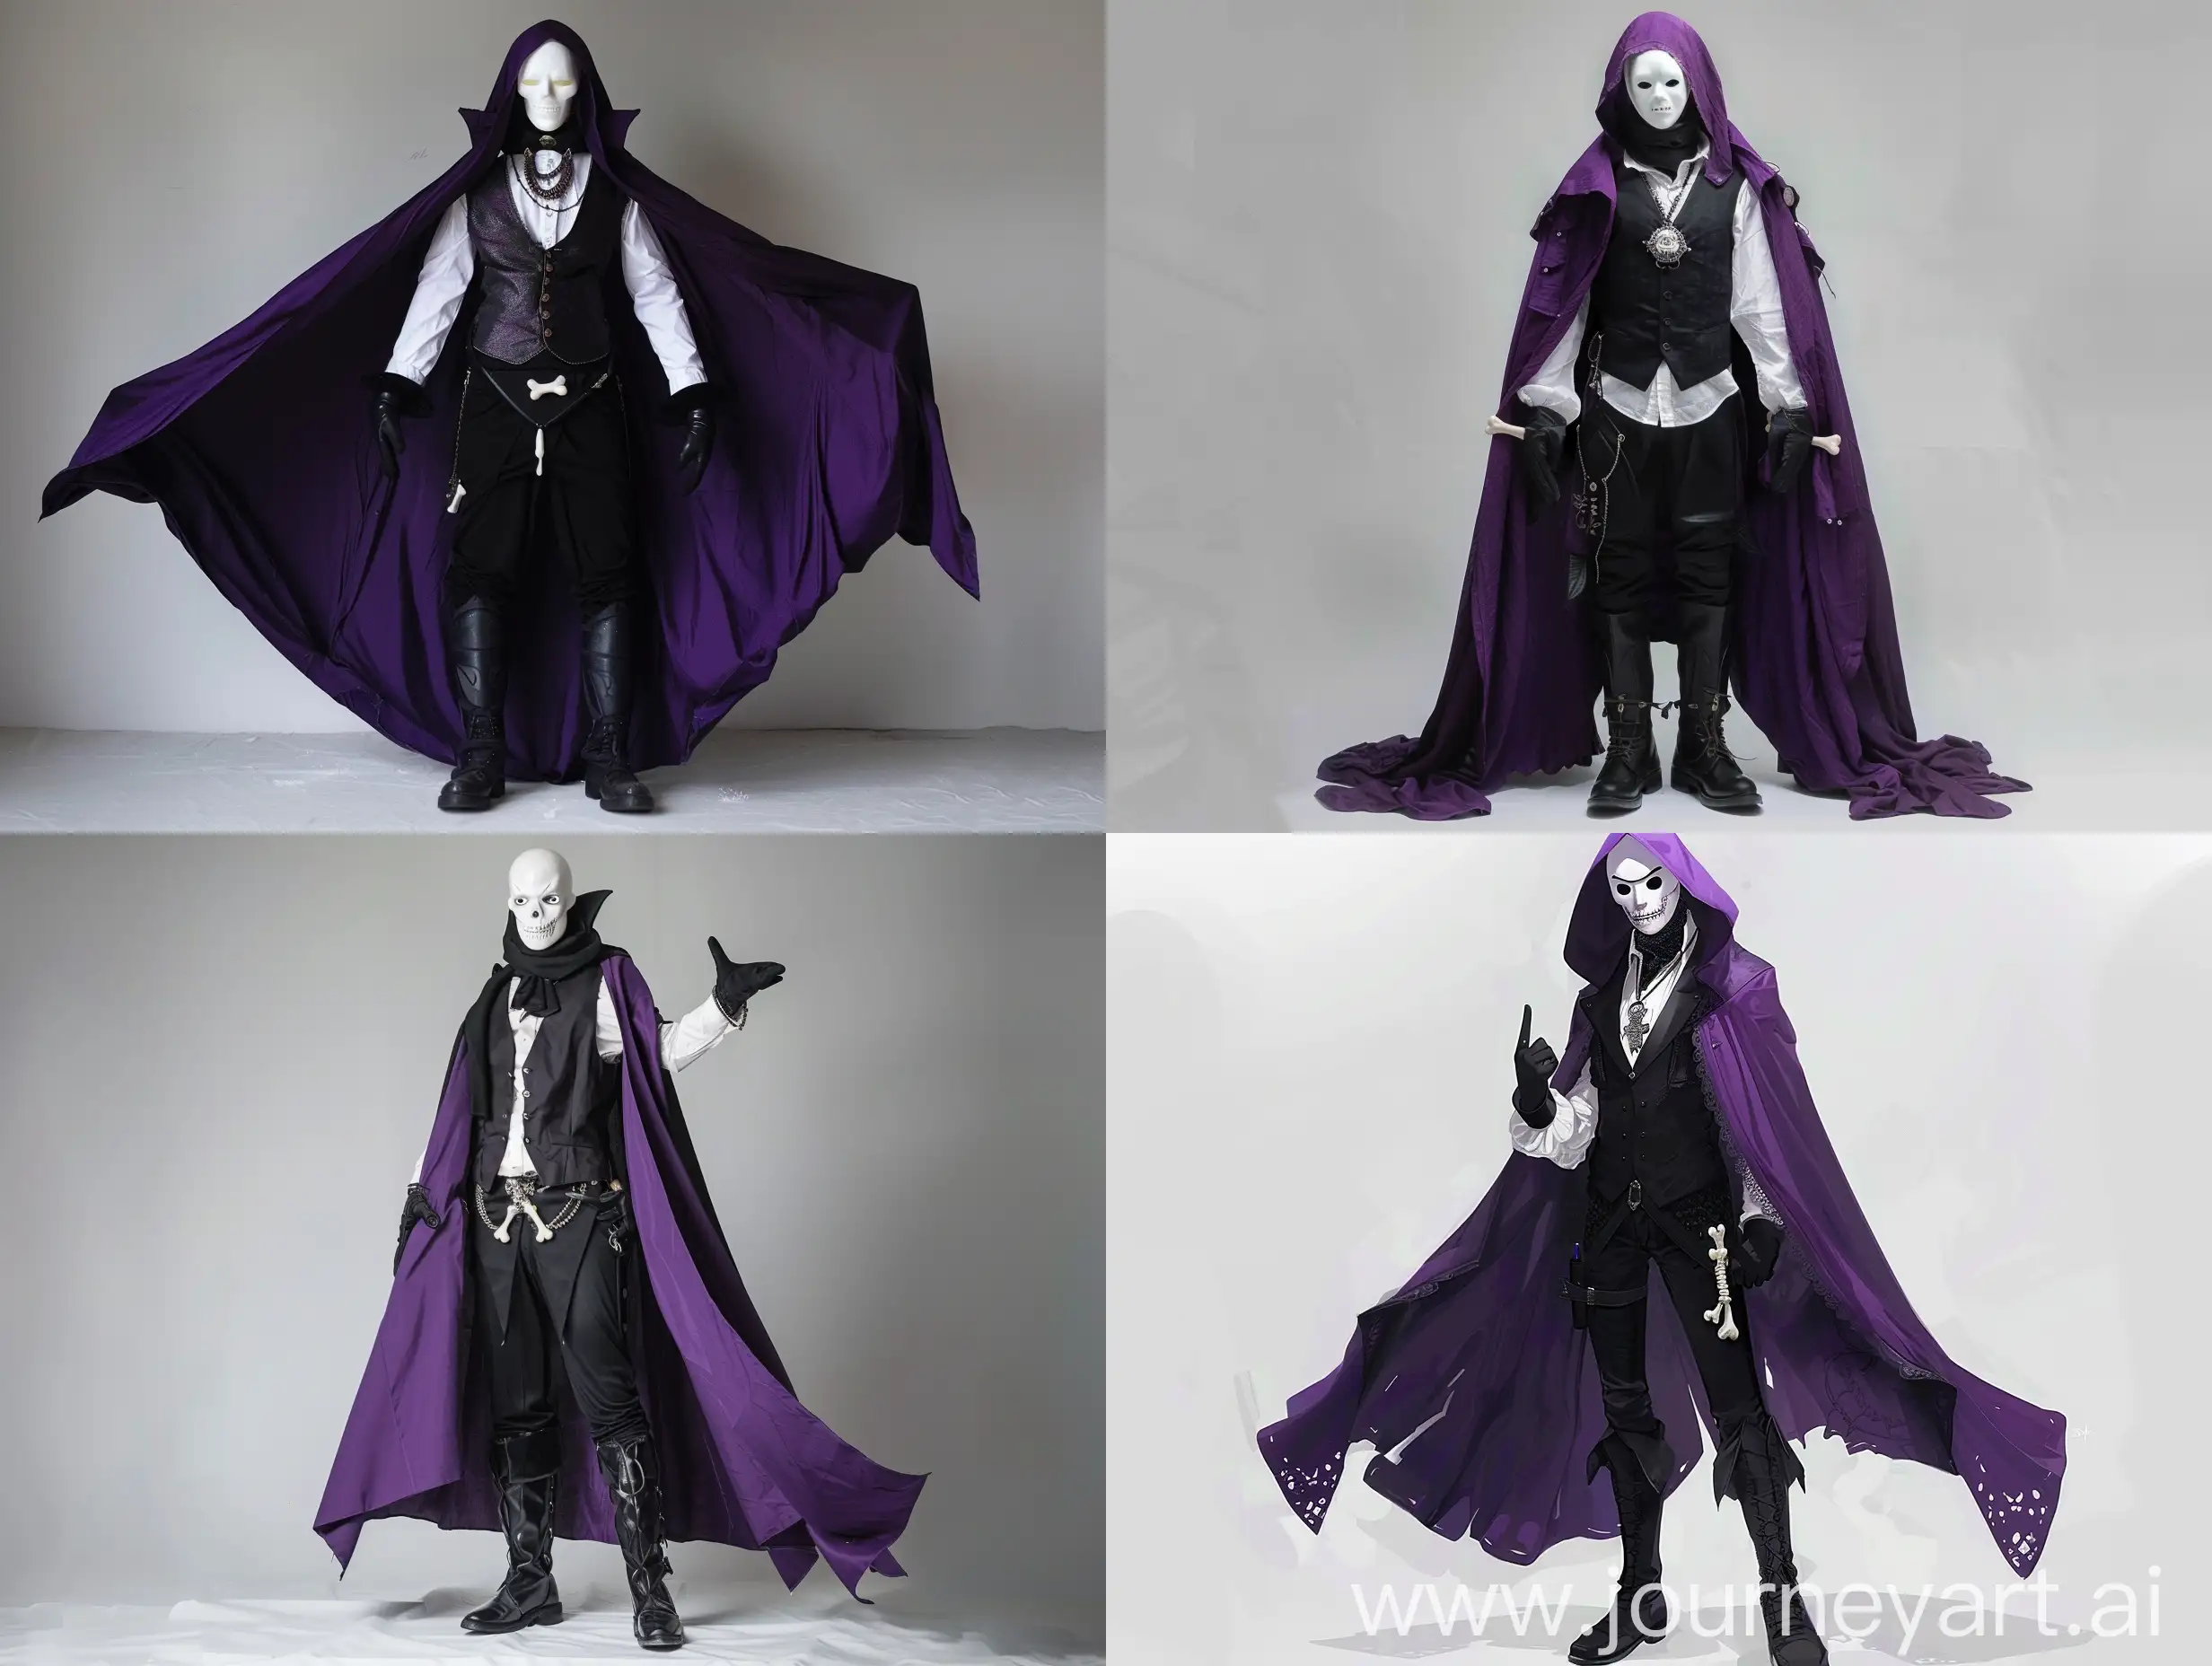 Stylish-Gothic-Anime-Villain-Costume-with-Purple-Cloak-and-Porcelain-Mask